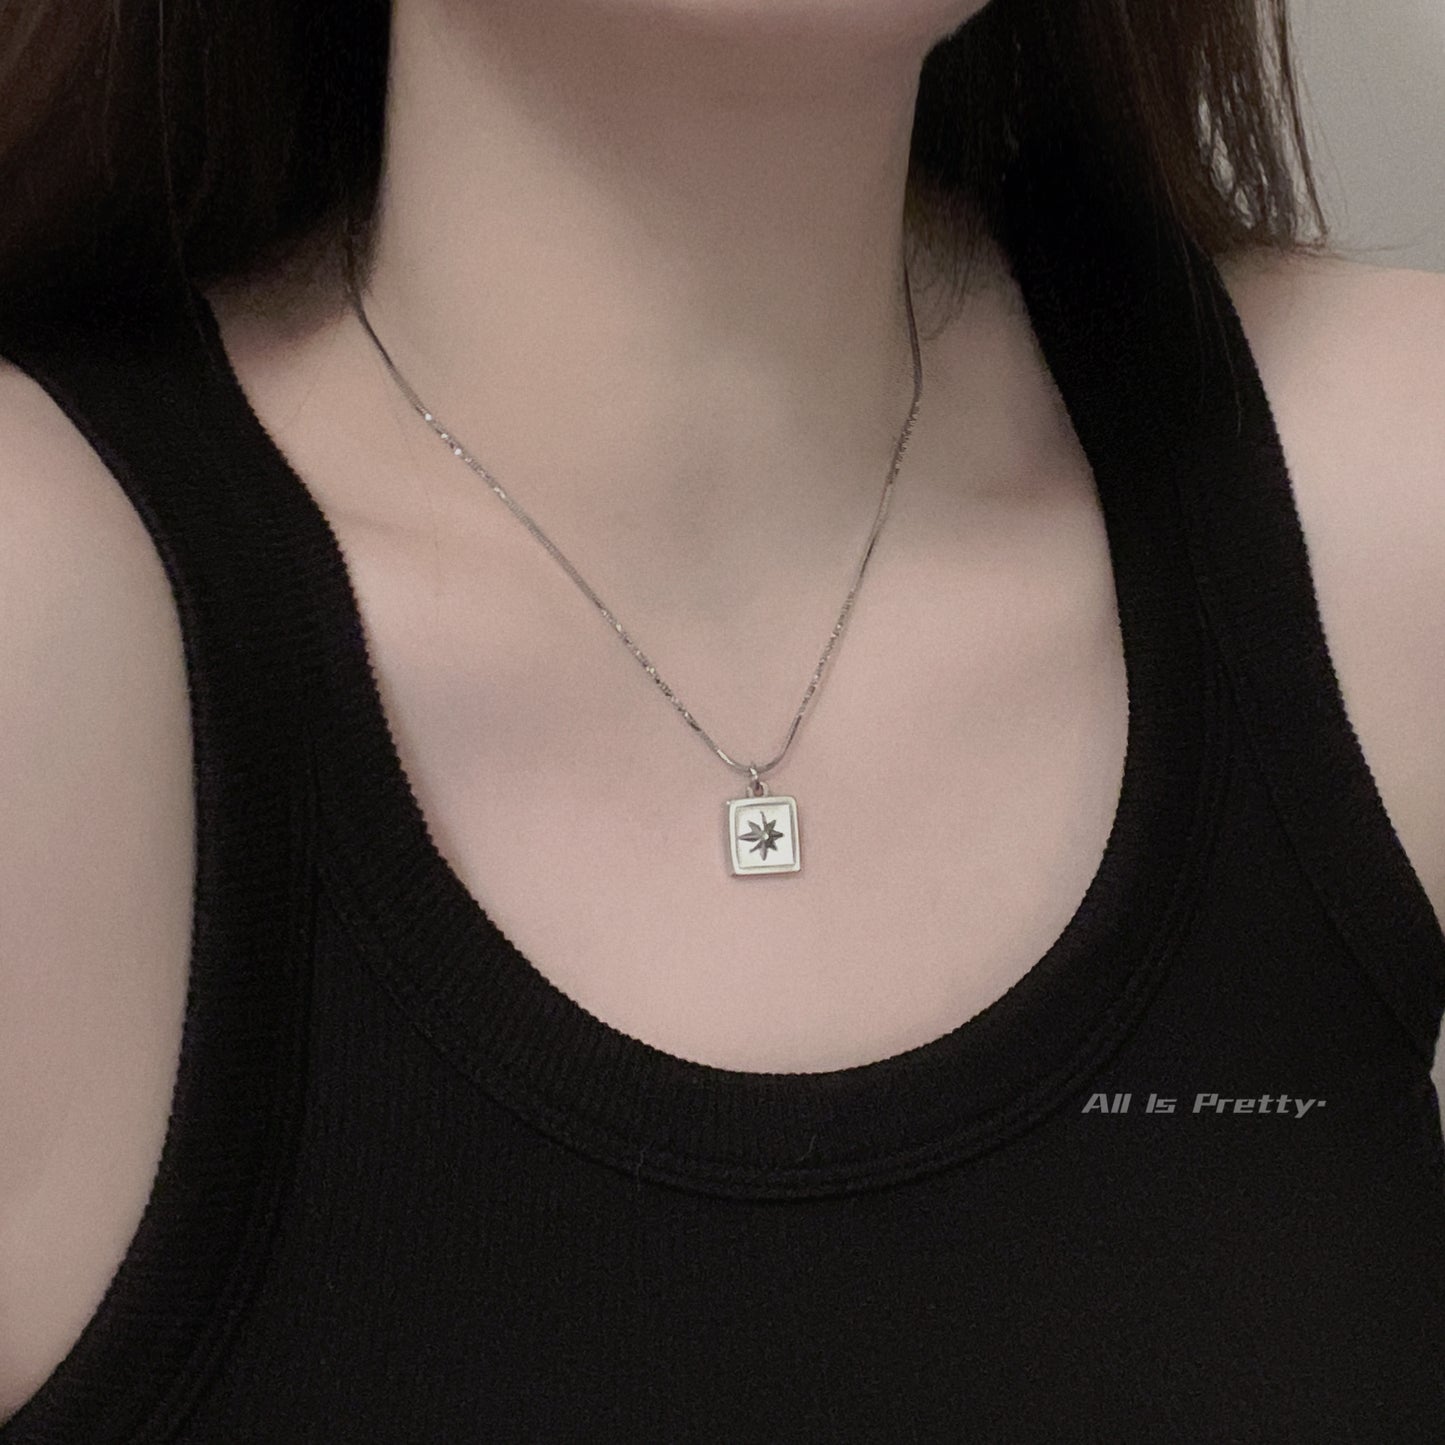 White star pendant necklace